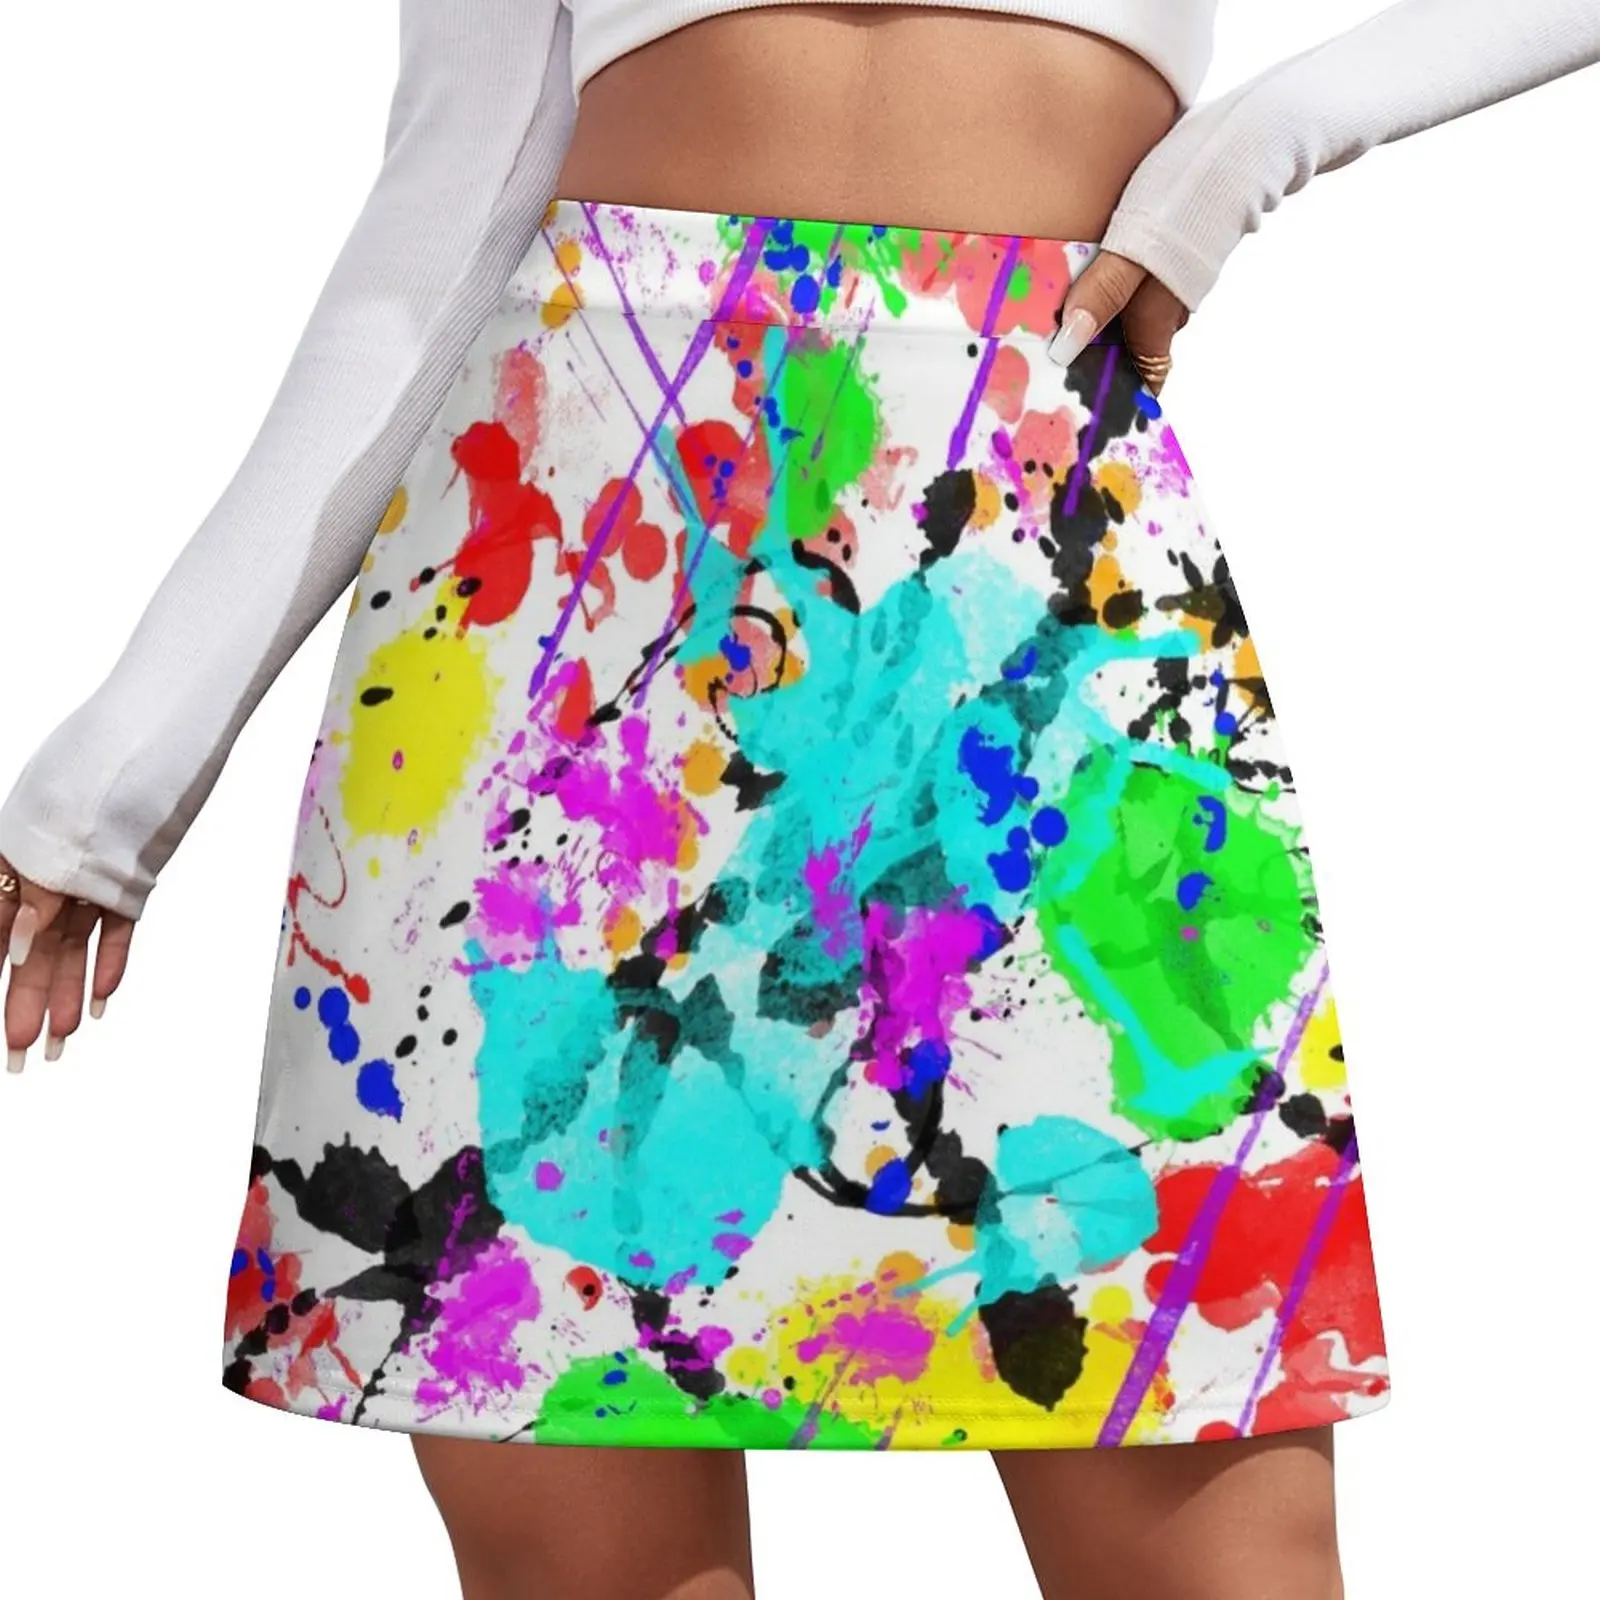 Watercolor splatter effect, neon colors Mini Skirt Woman short skirt 90s vintage clothes